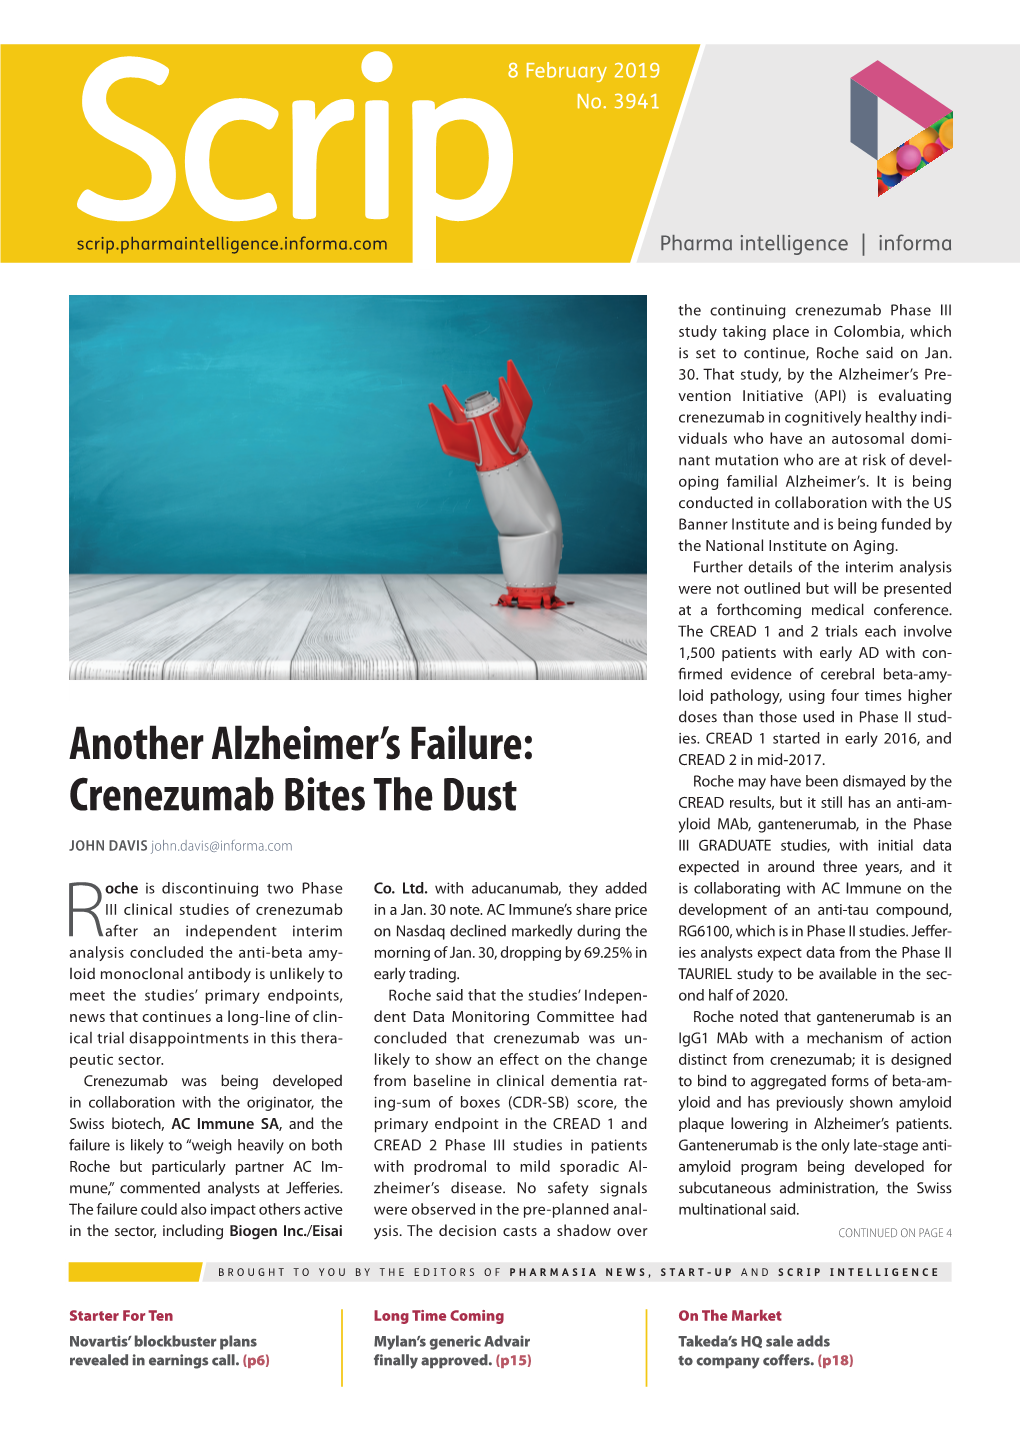 Another Alzheimer's Failure: Crenezumab Bites the Dust